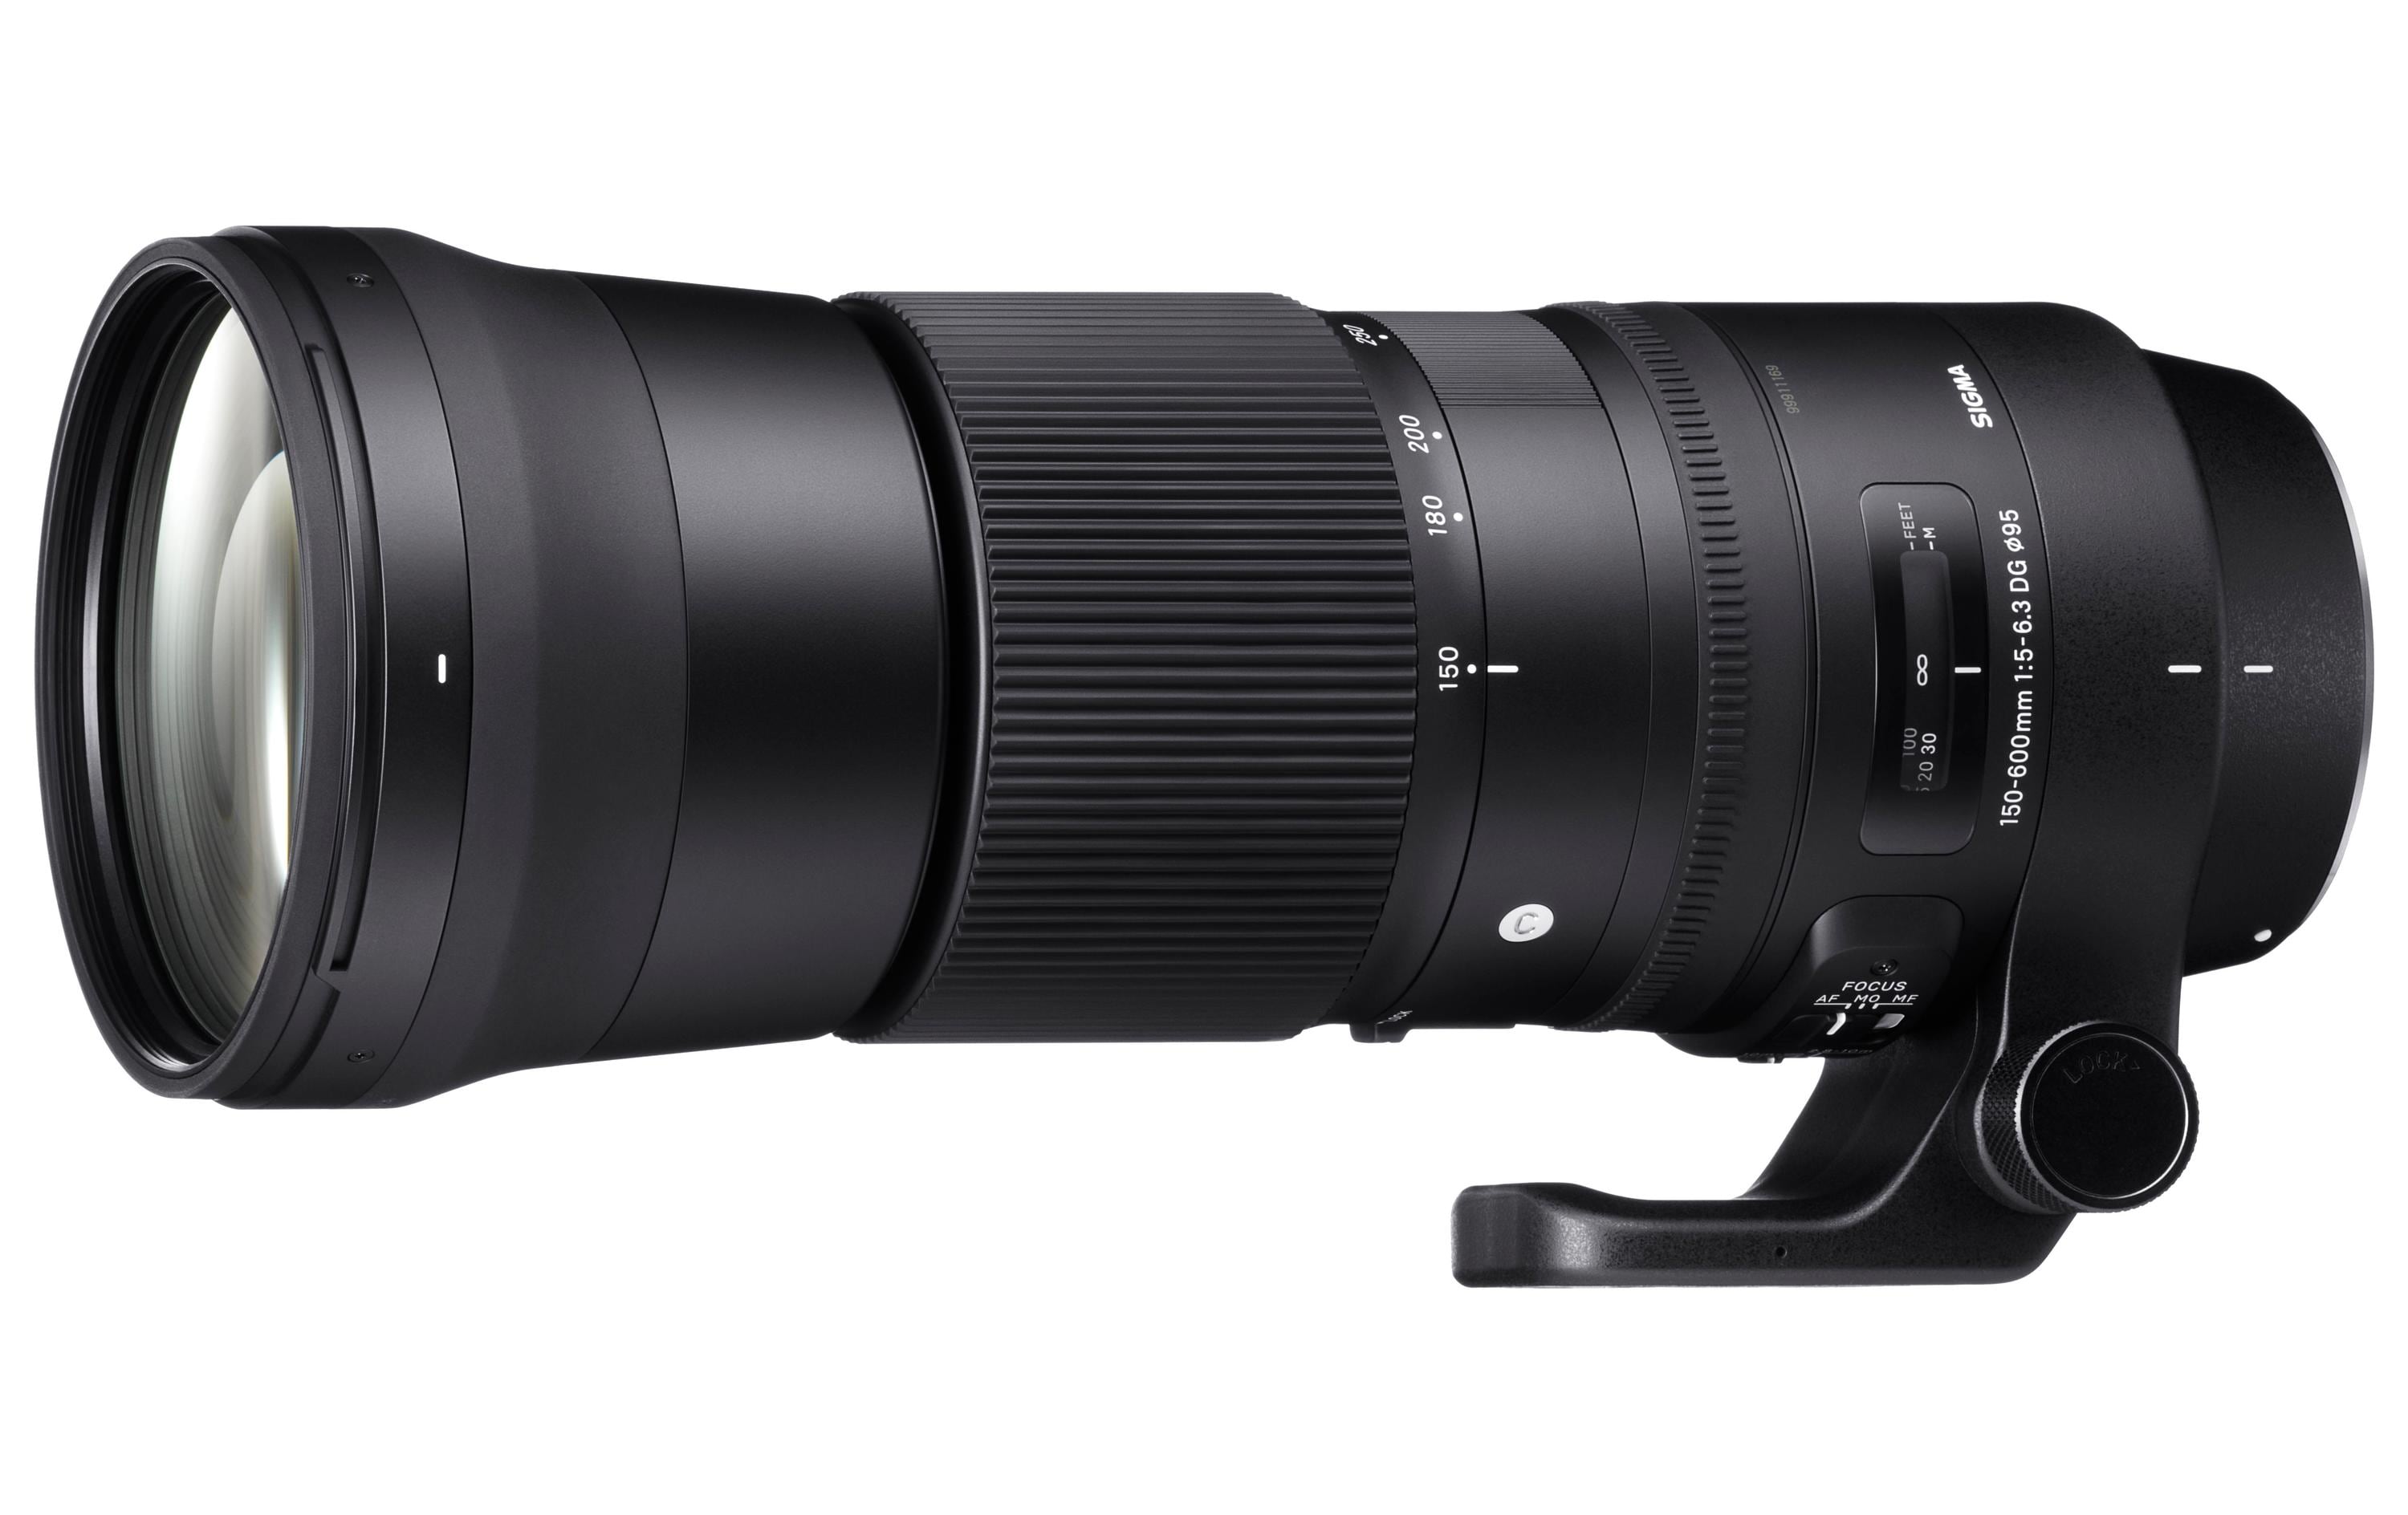 Sigma Zoomobjektiv 150-600mm F/5.0-6.3 DG OS HSM c Canon EF